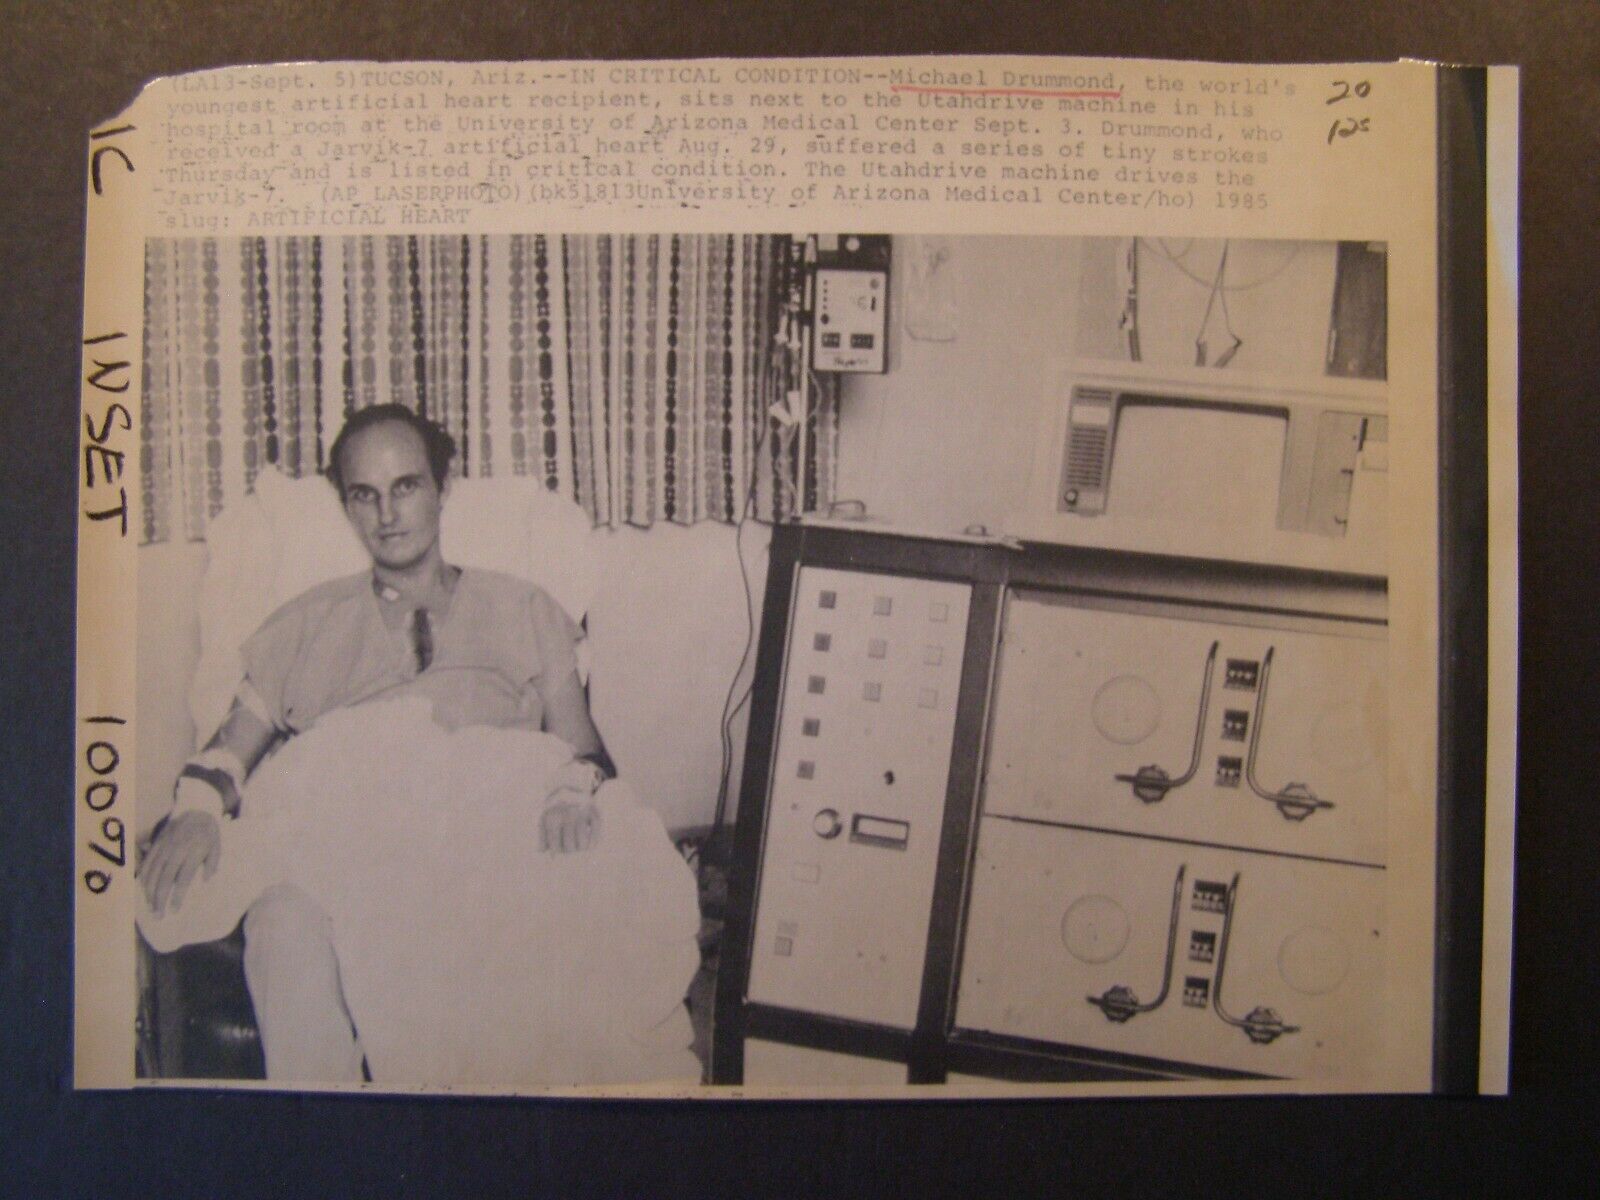 AP Wire Press Photo 1985 Artificial Heart Recipient Michael Drummond tiny stroke